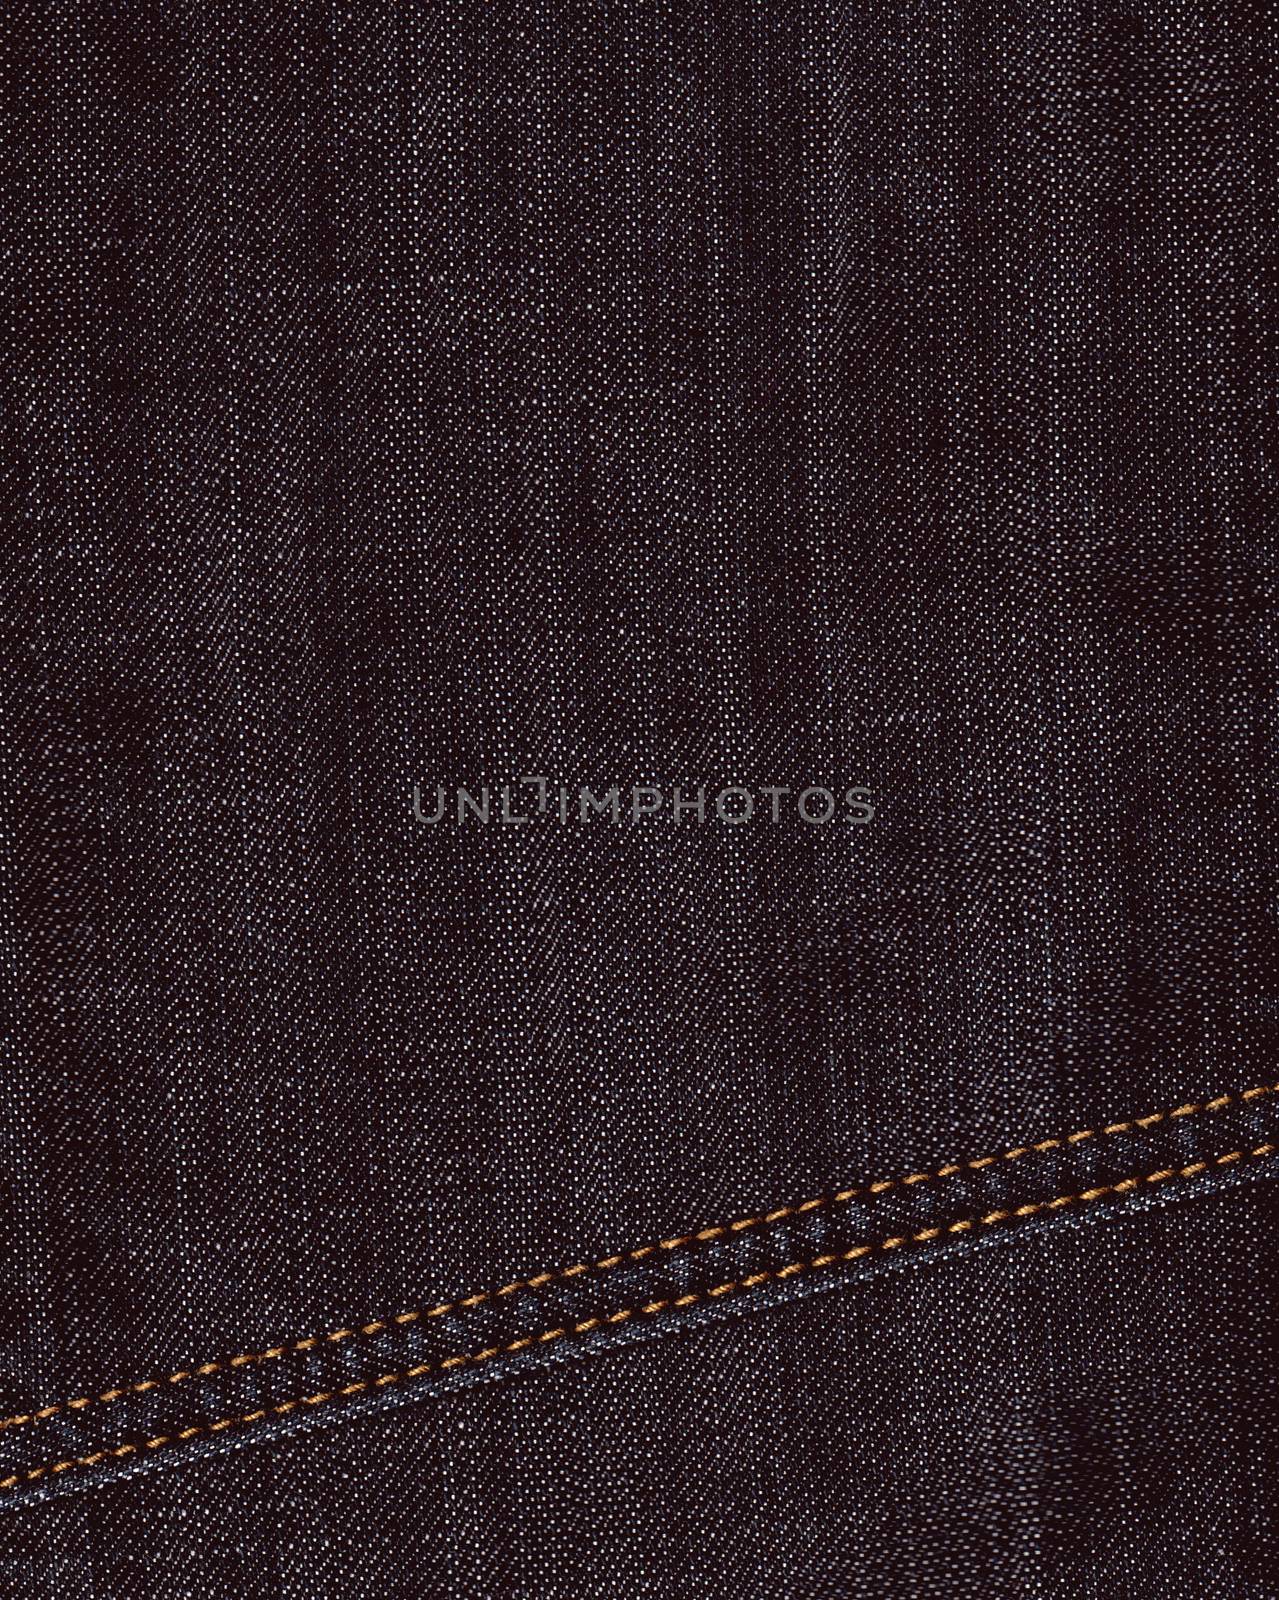 Black jeans denim background by day908